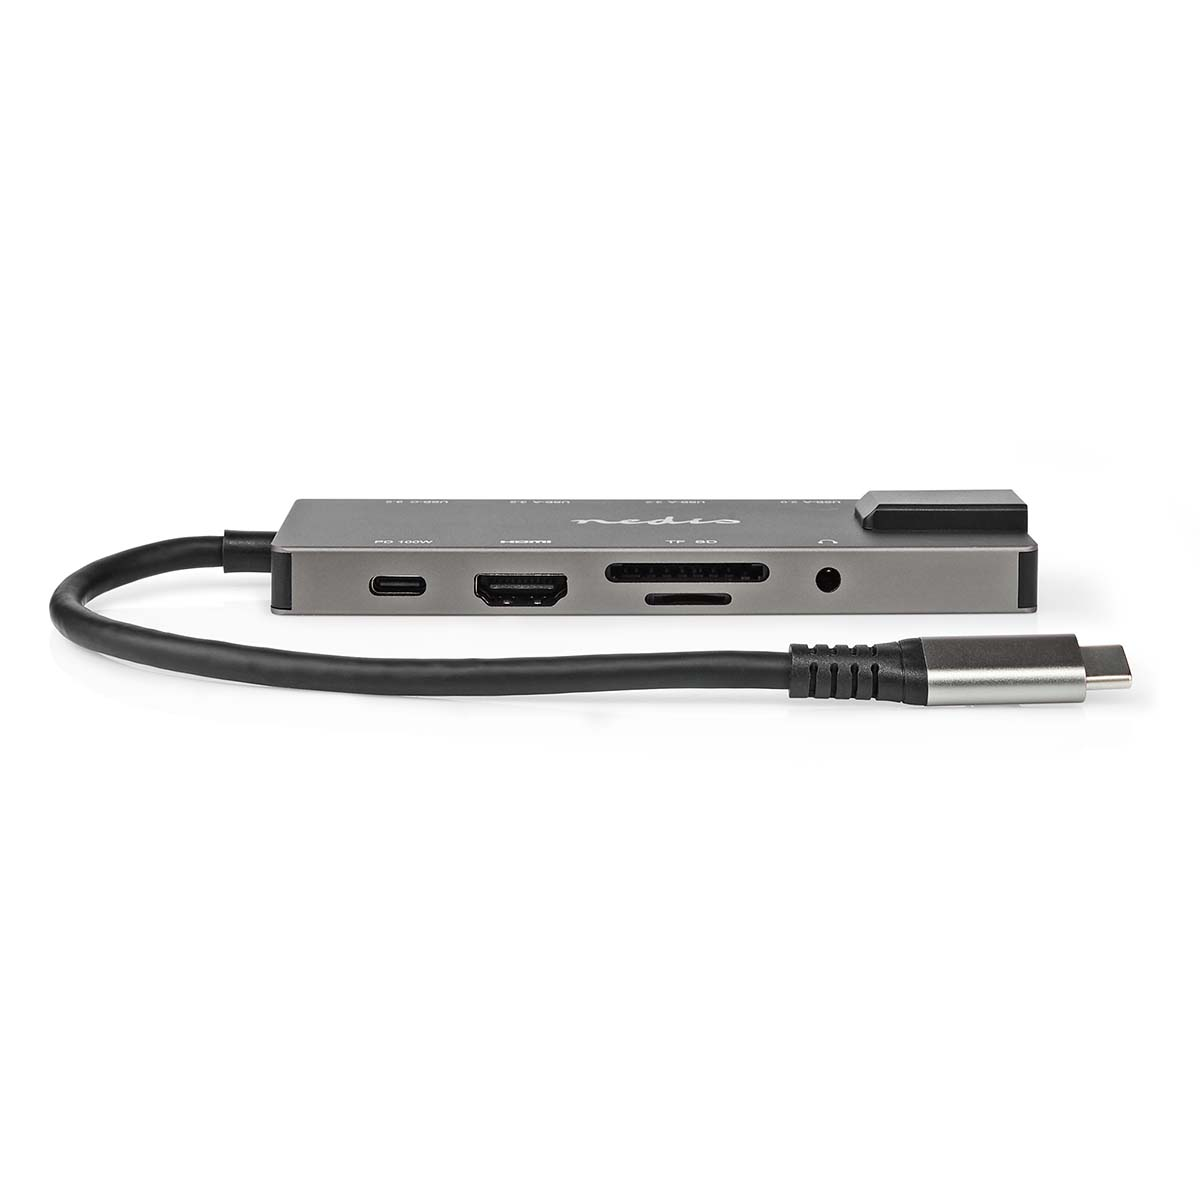 NEDIS CCBW64775AT02, USB Multi-Port-Adapter